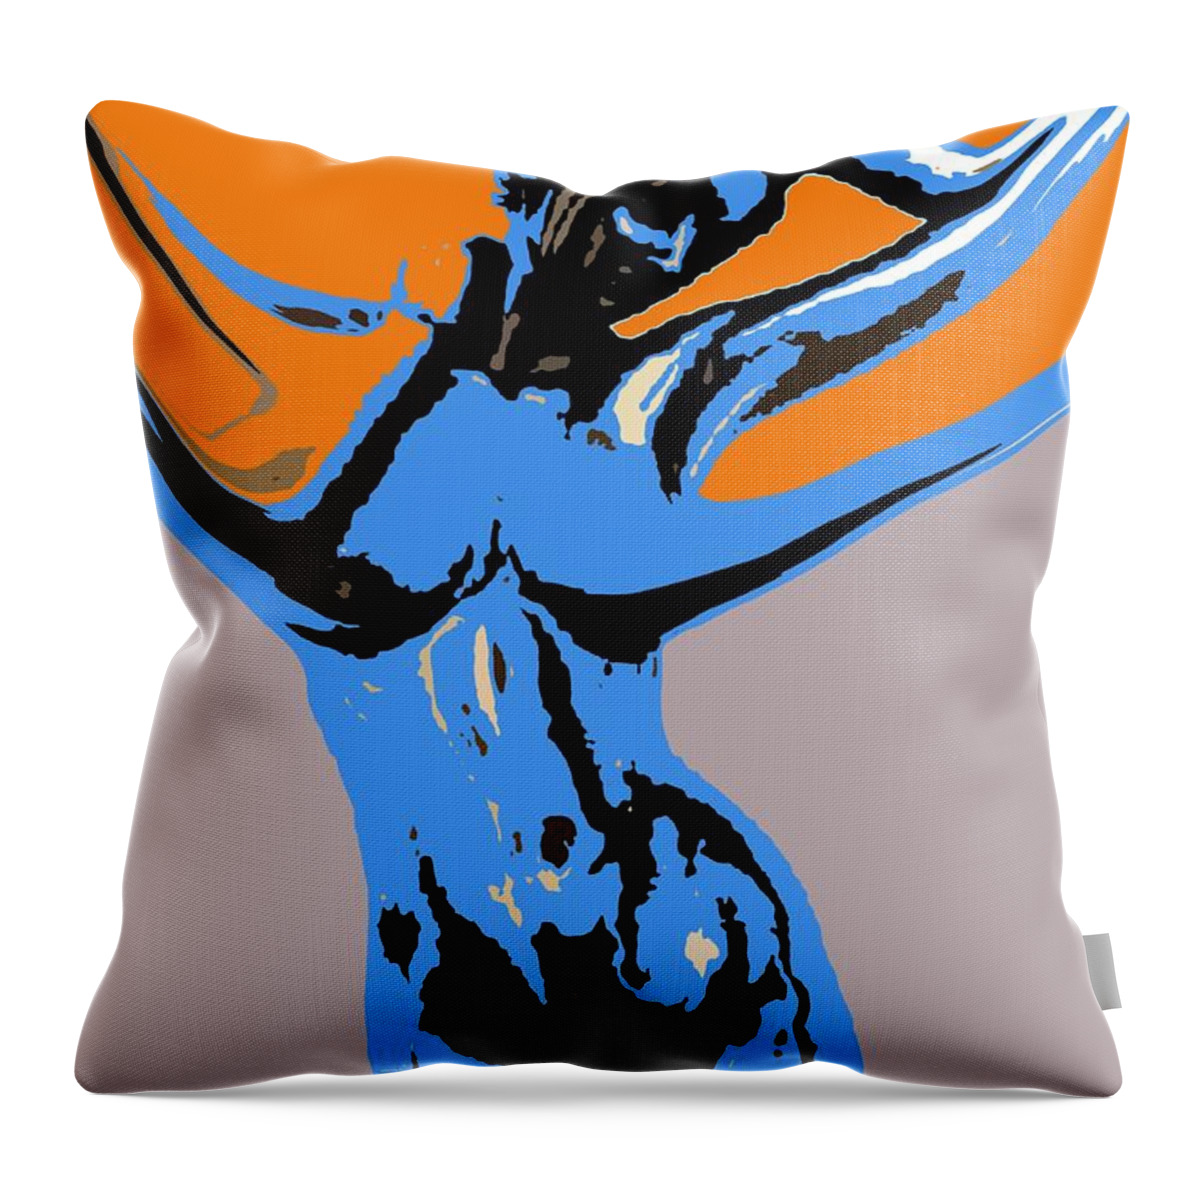 Pietyz Throw Pillow featuring the digital art Orange Wine by Piety Dsilva